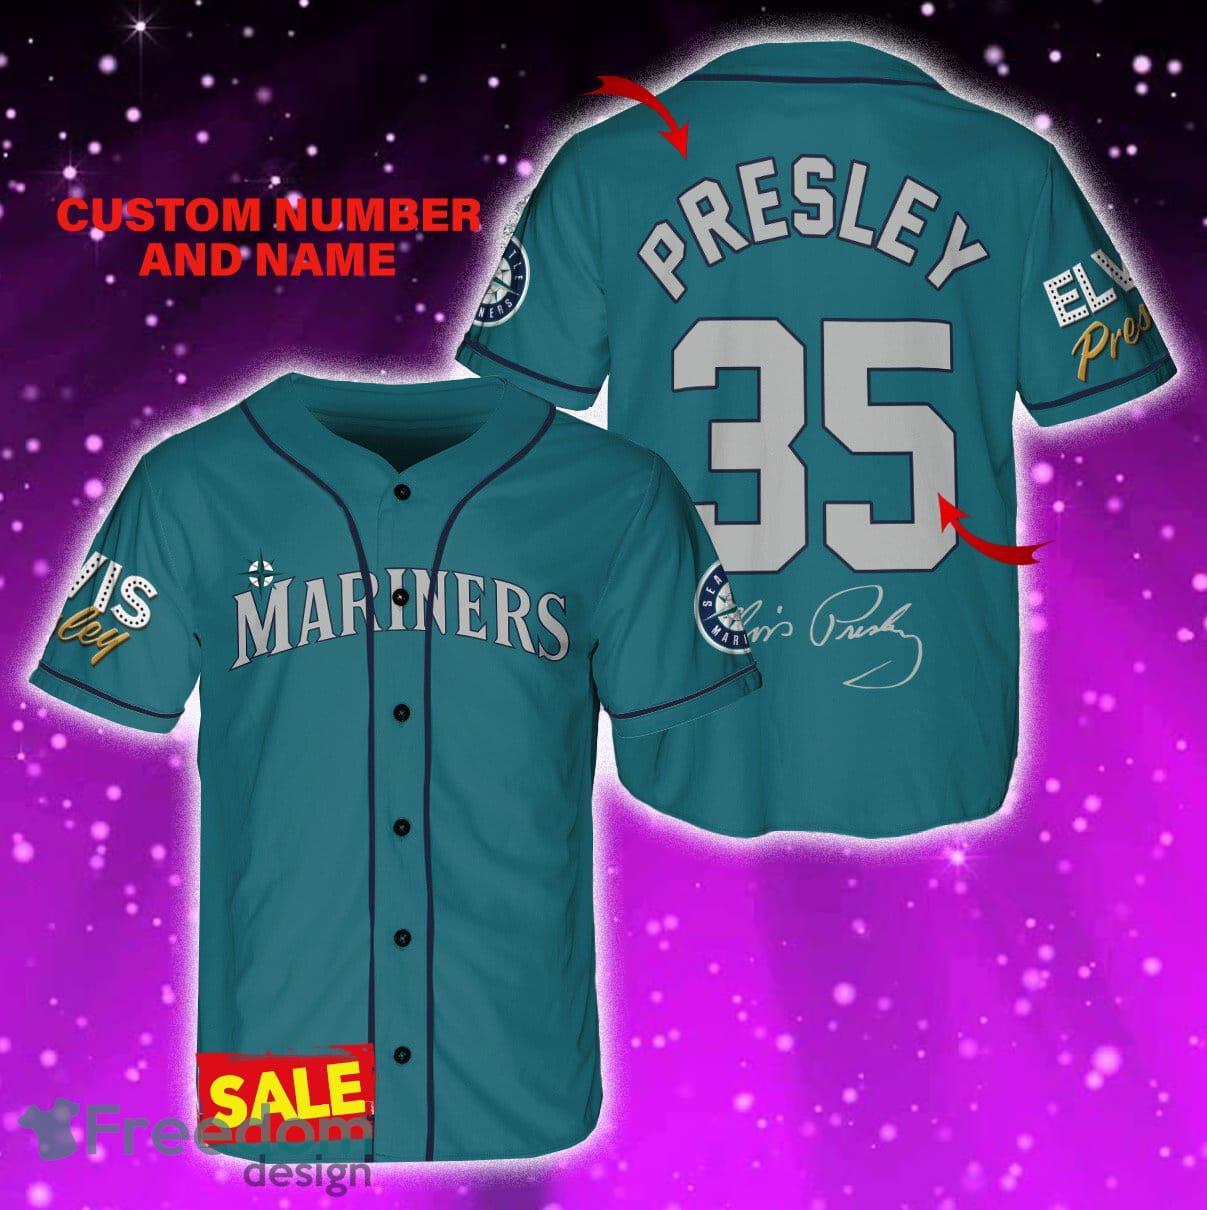 Seattle Mariners Elvis Presley Jersey Baseball Shirt Aqua Custom Number And  Name - Freedomdesign